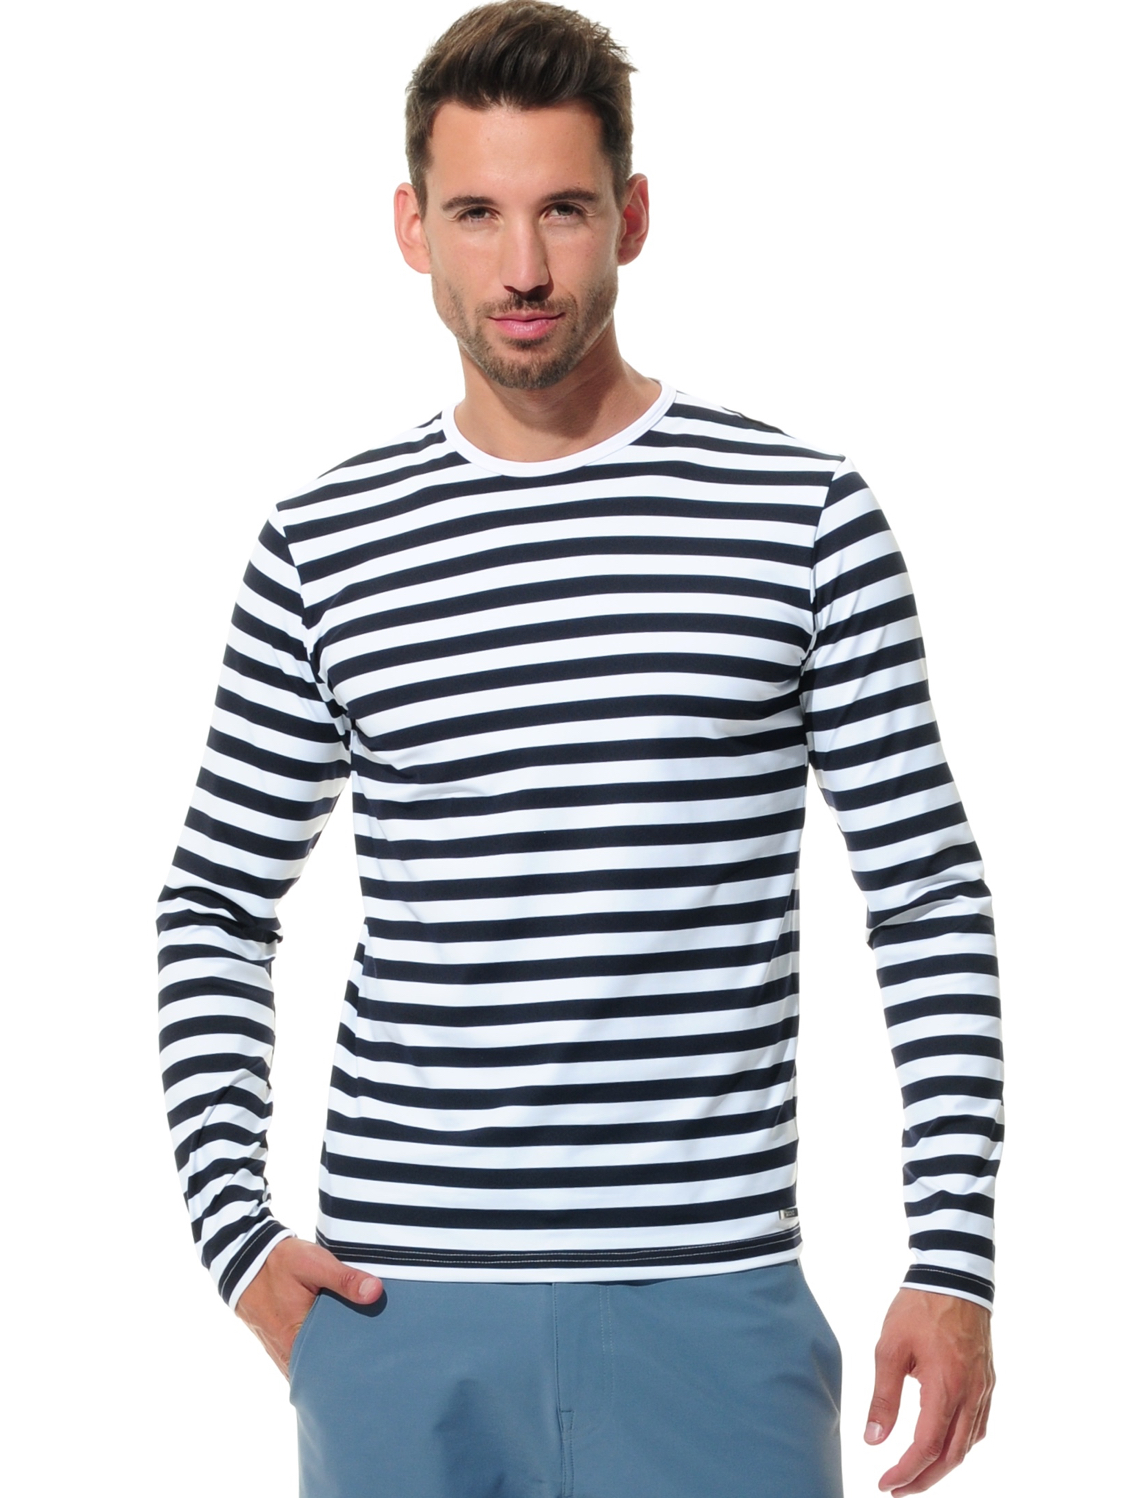 Stripe longsleeve shirt night blue/white 